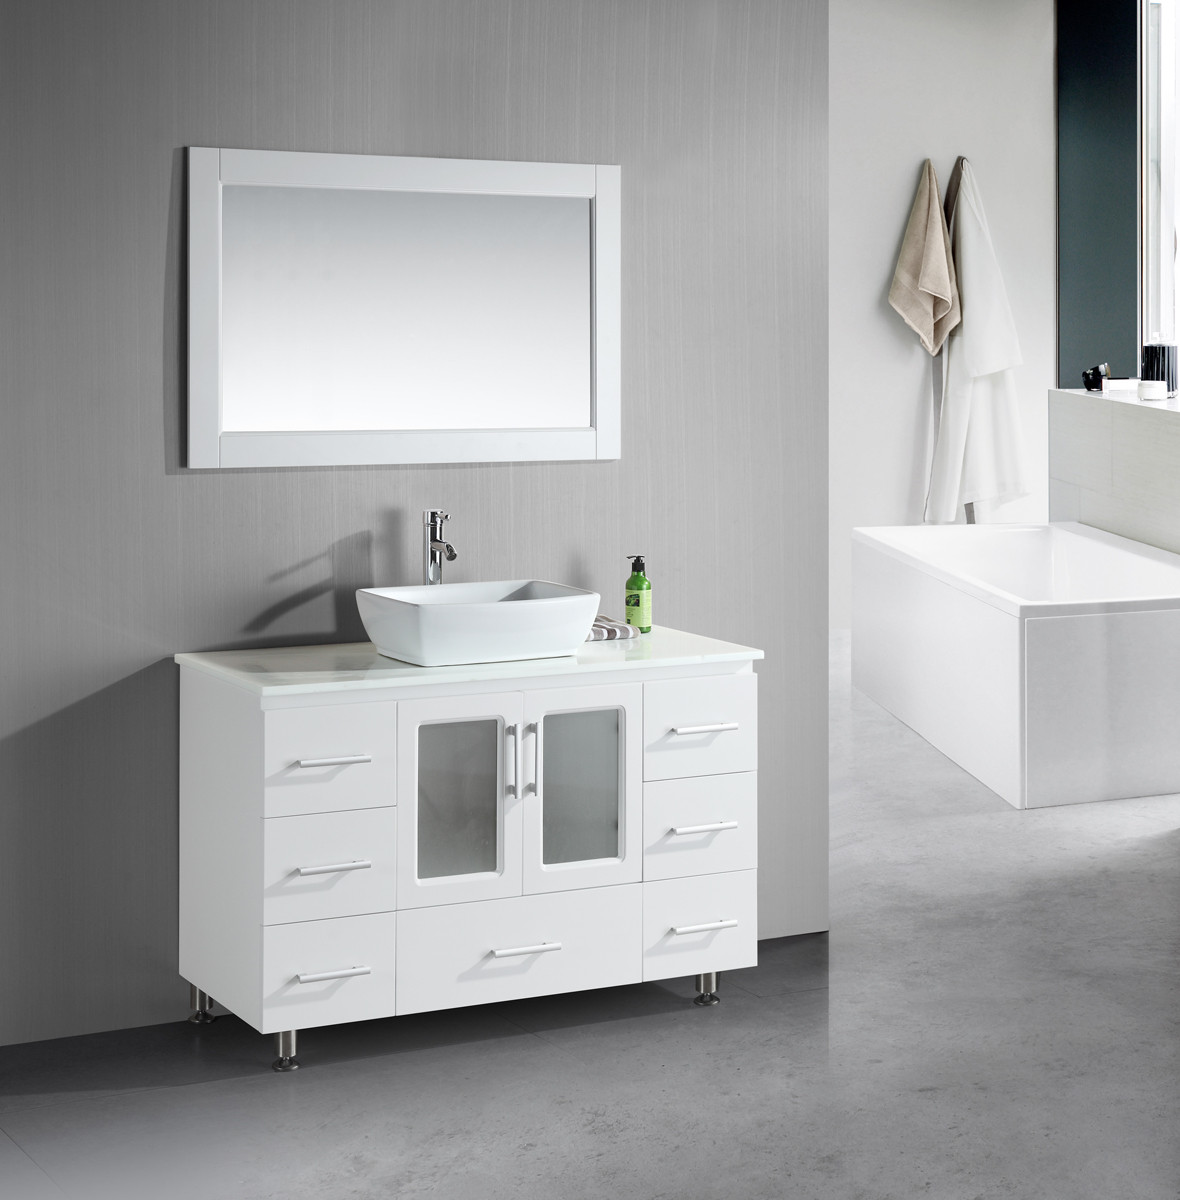 Small Bathroom Vanity Mirrors
 Small Bathroom Vanities With Vessel Sinks to Create Cool